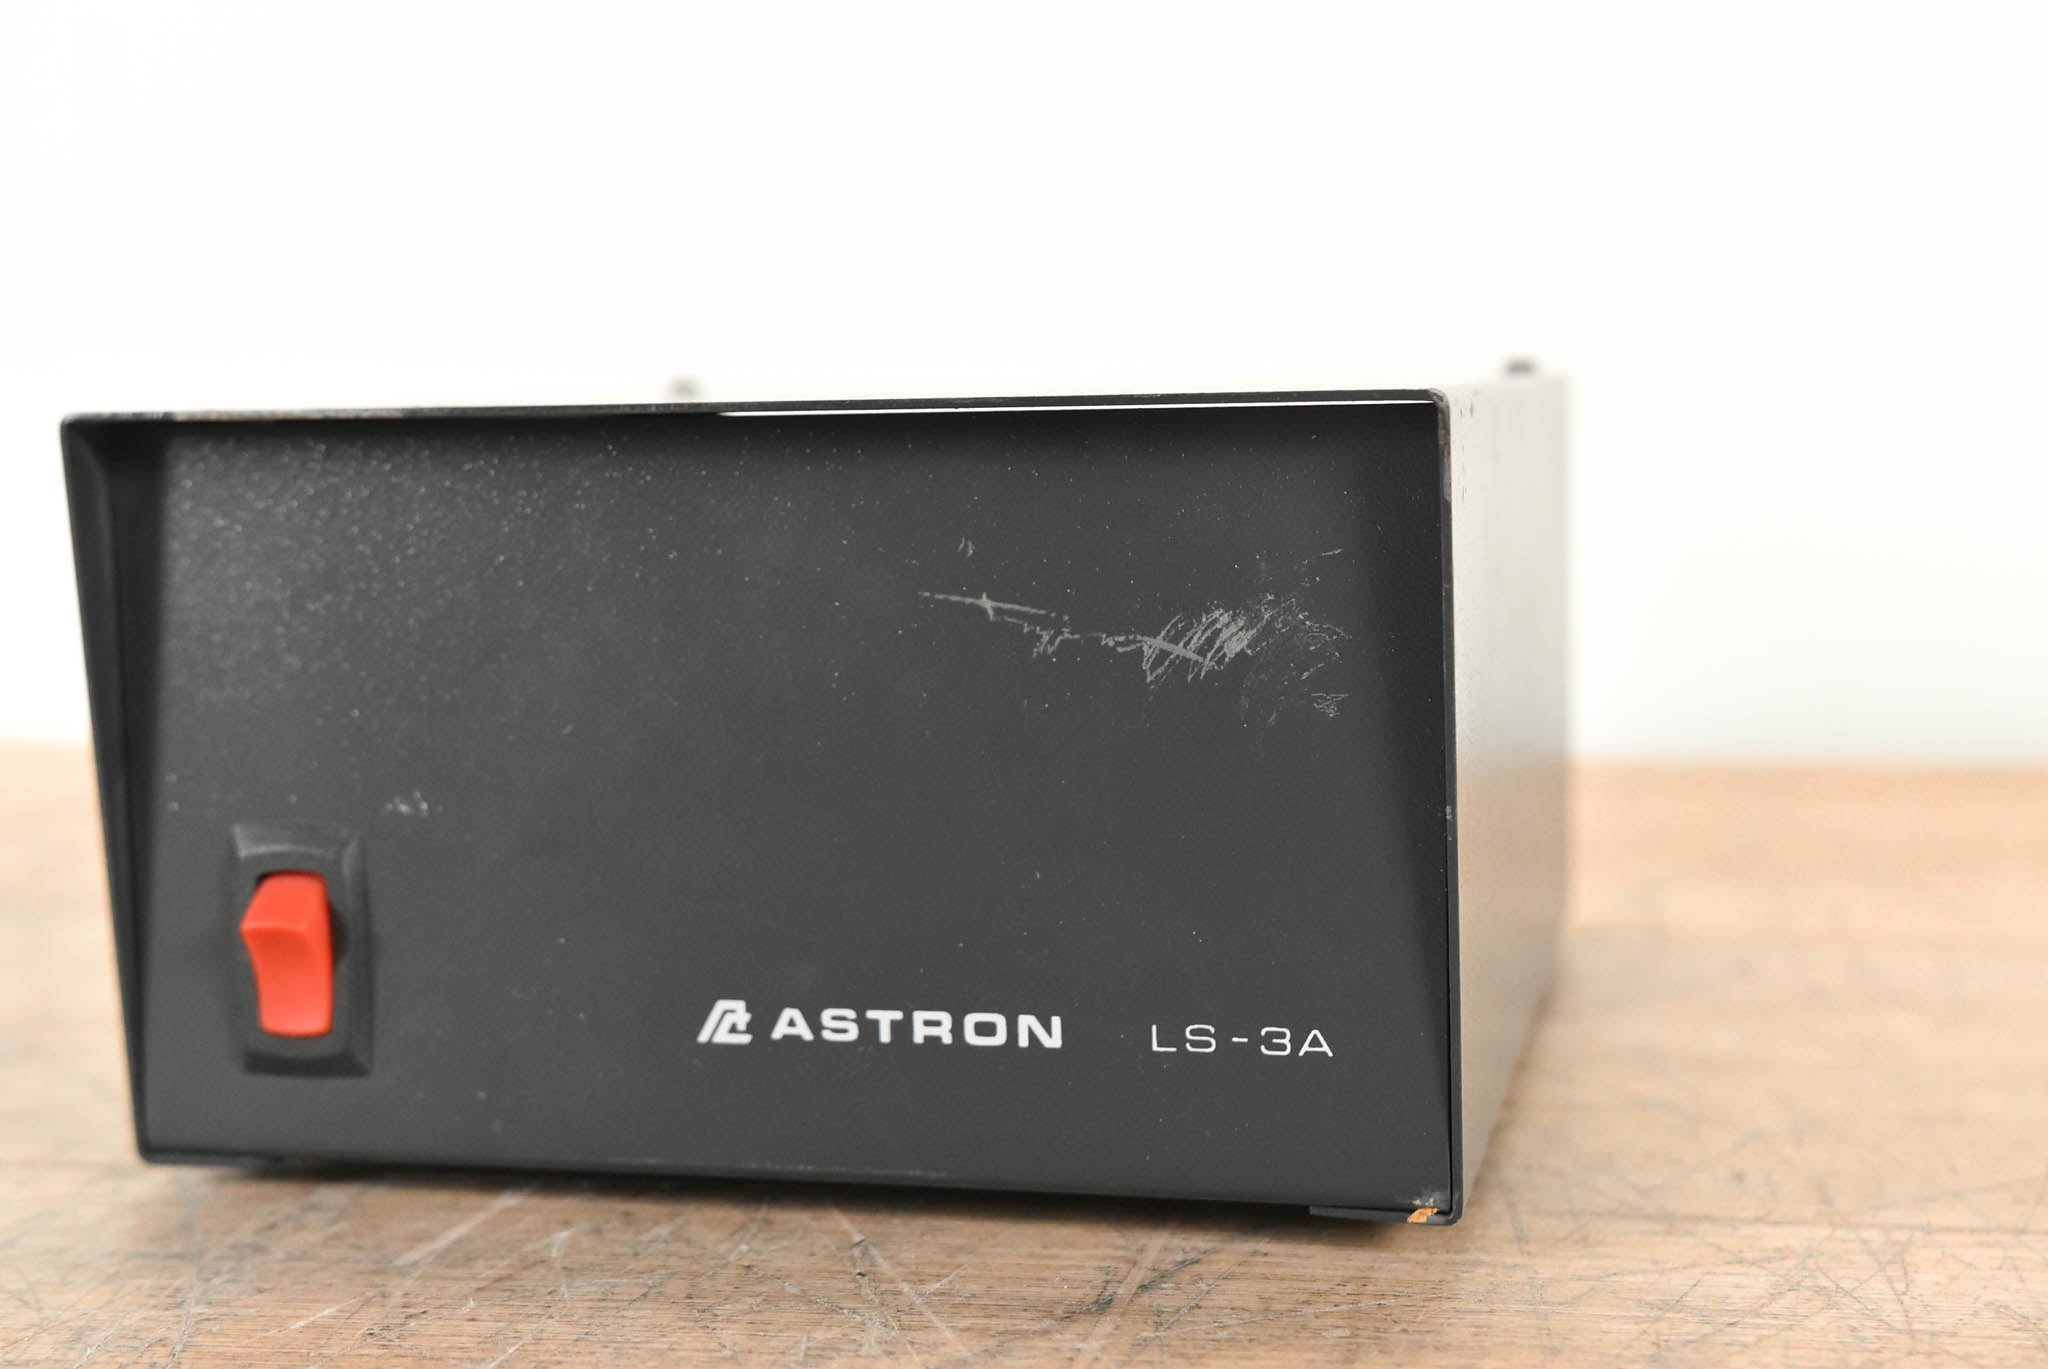 Astron LS-3A 28 Volt DC Linear Power Supply